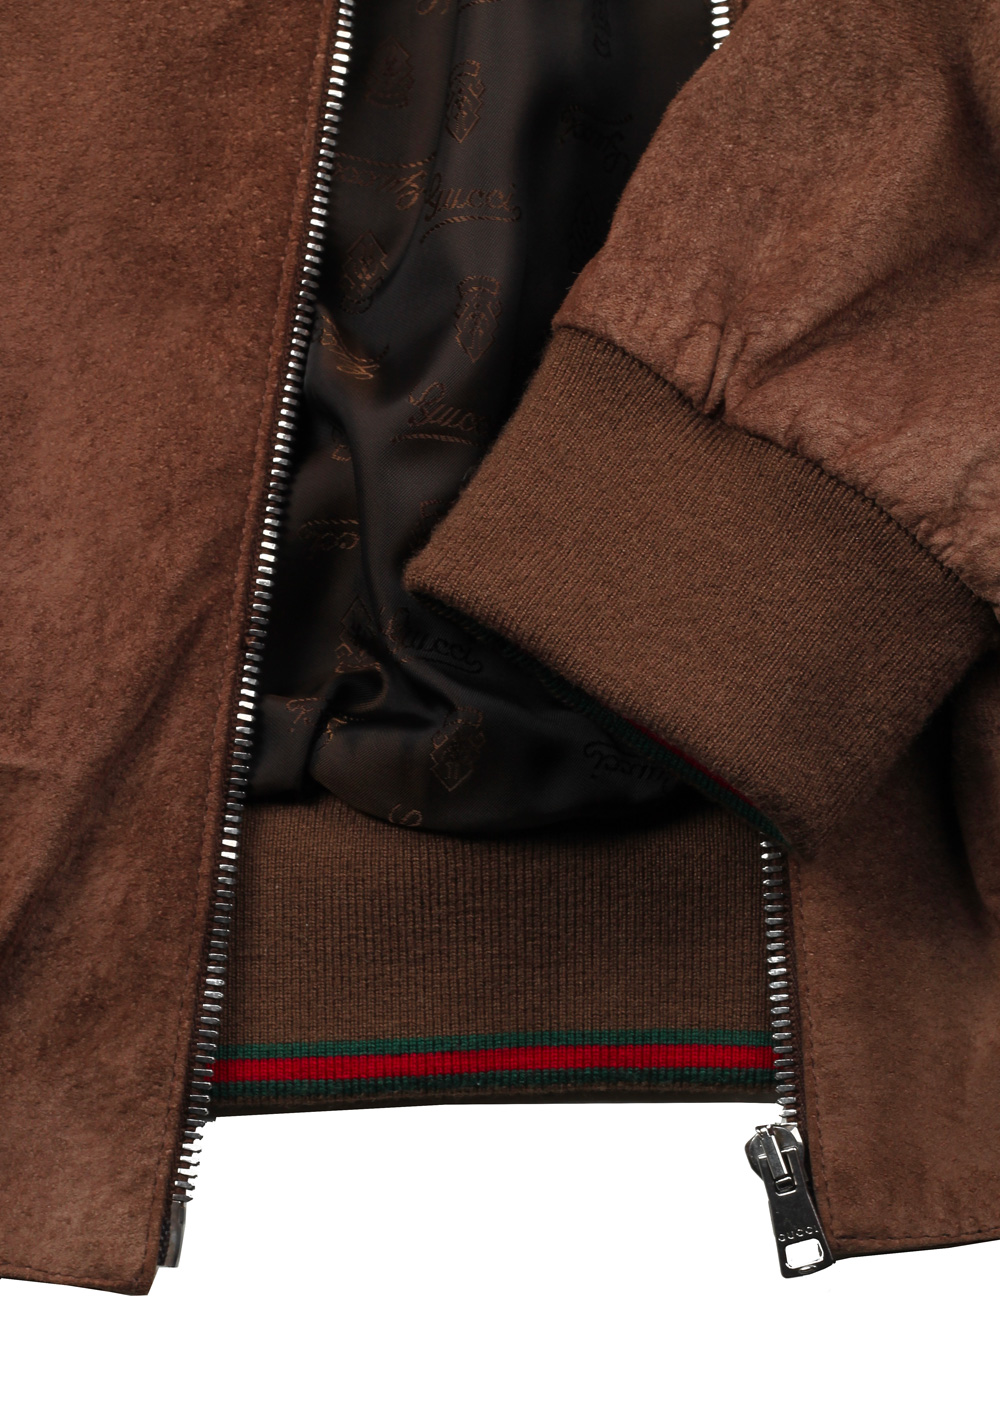 Gucci Brown Leather Bomber Jacket Coat Size 48 / 38R U.S. | Costume Limité